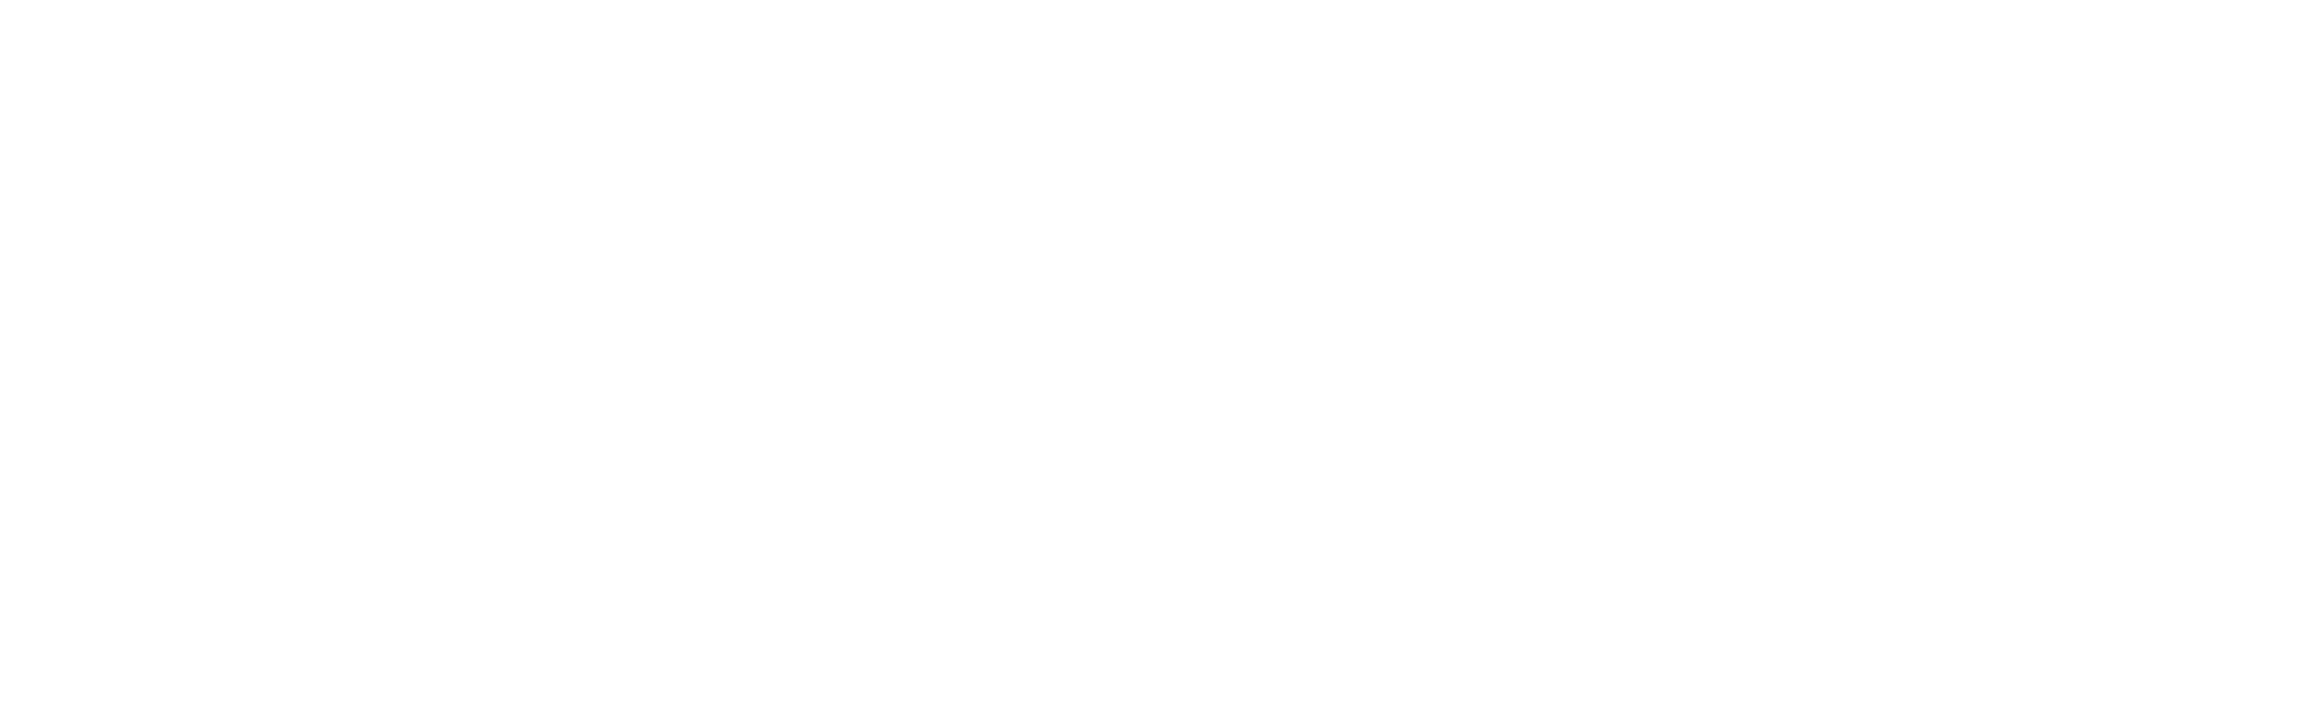 Mizan logo black1